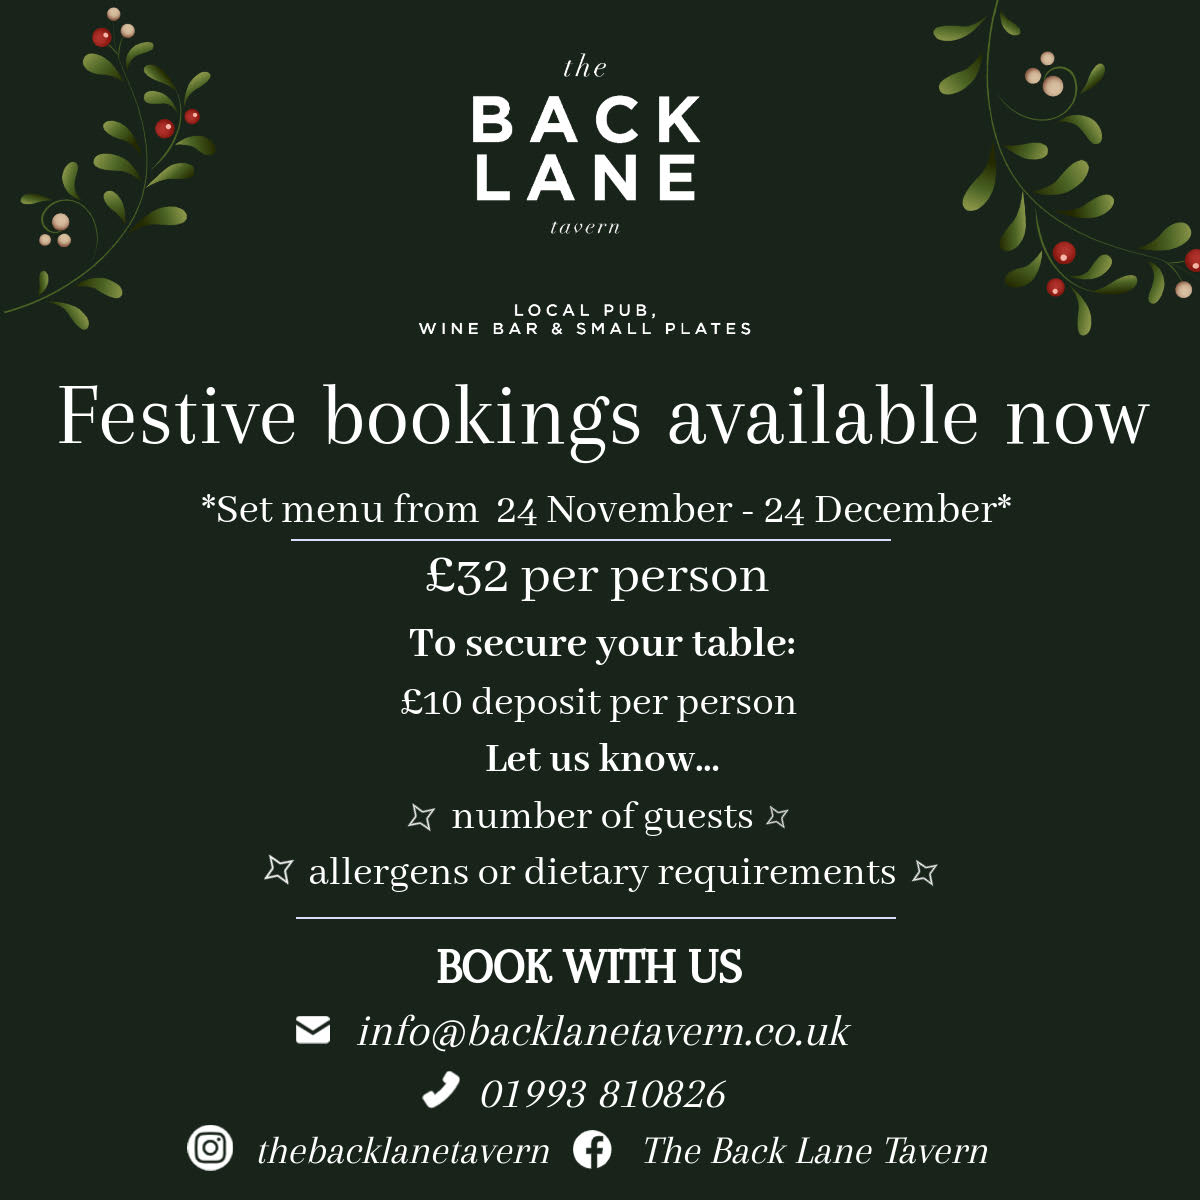 Details of Festive Season at The Back Lane Tavern